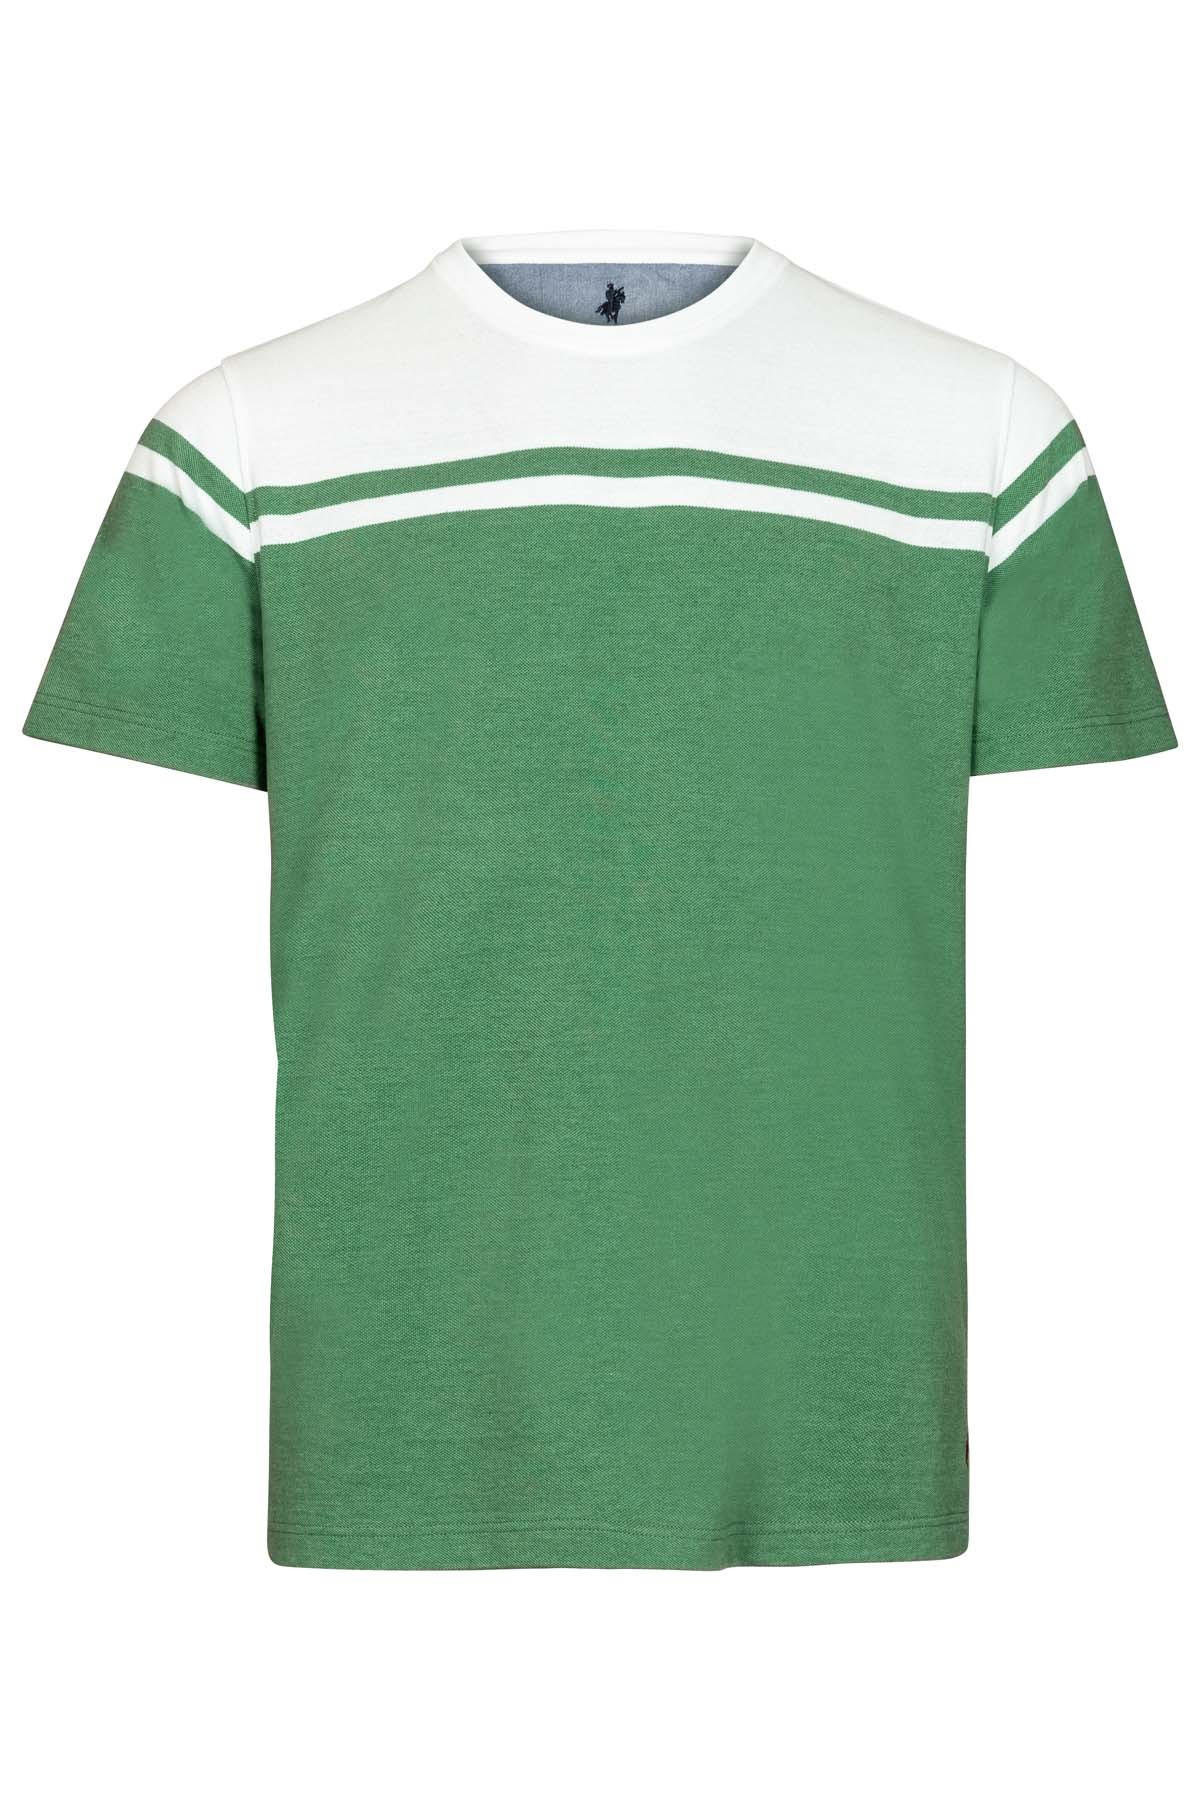 t-shirt vert et blanc en coton Bayard